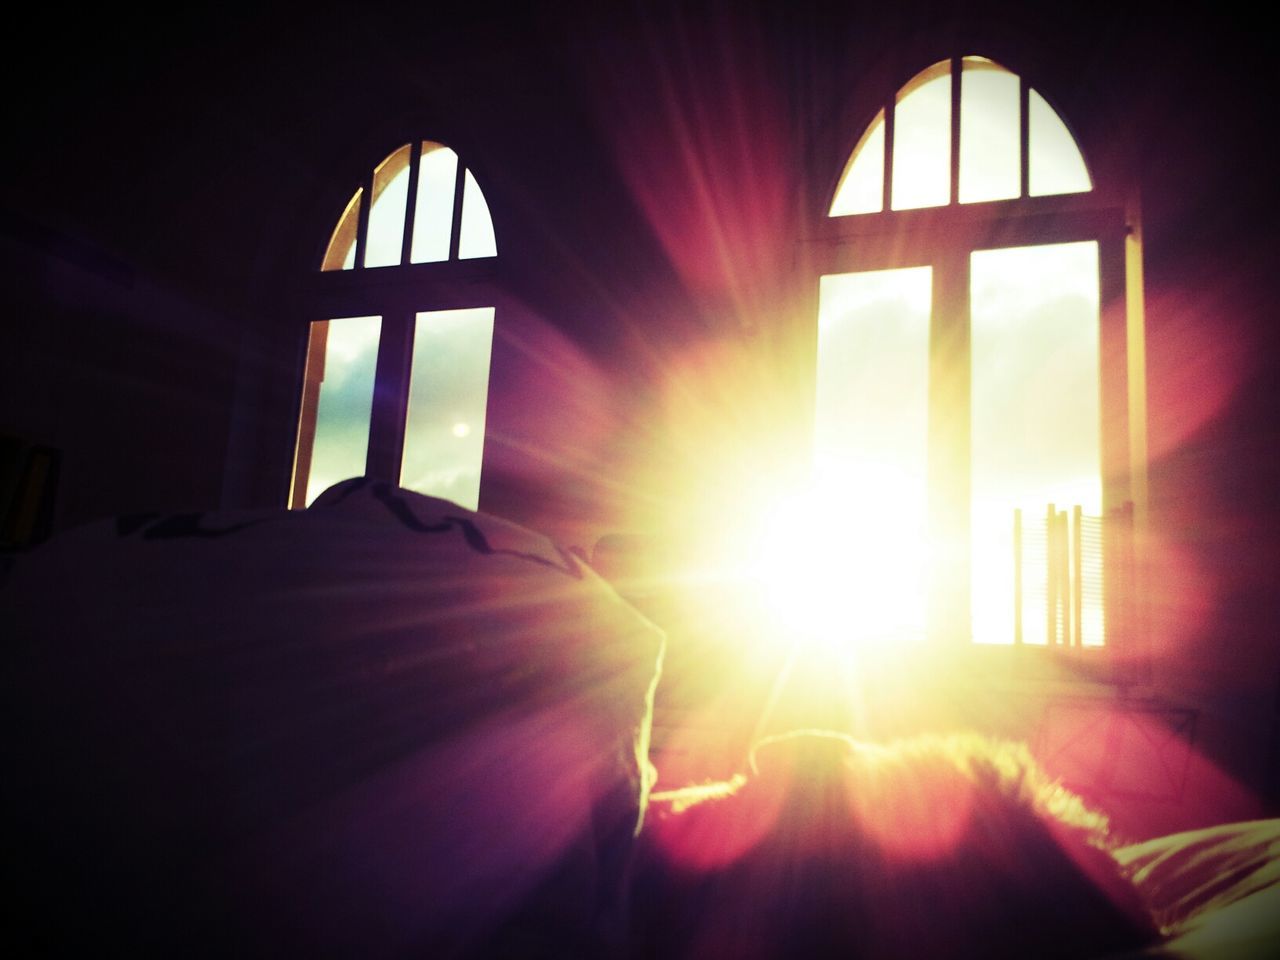 SUN SHINING THROUGH WINDOW